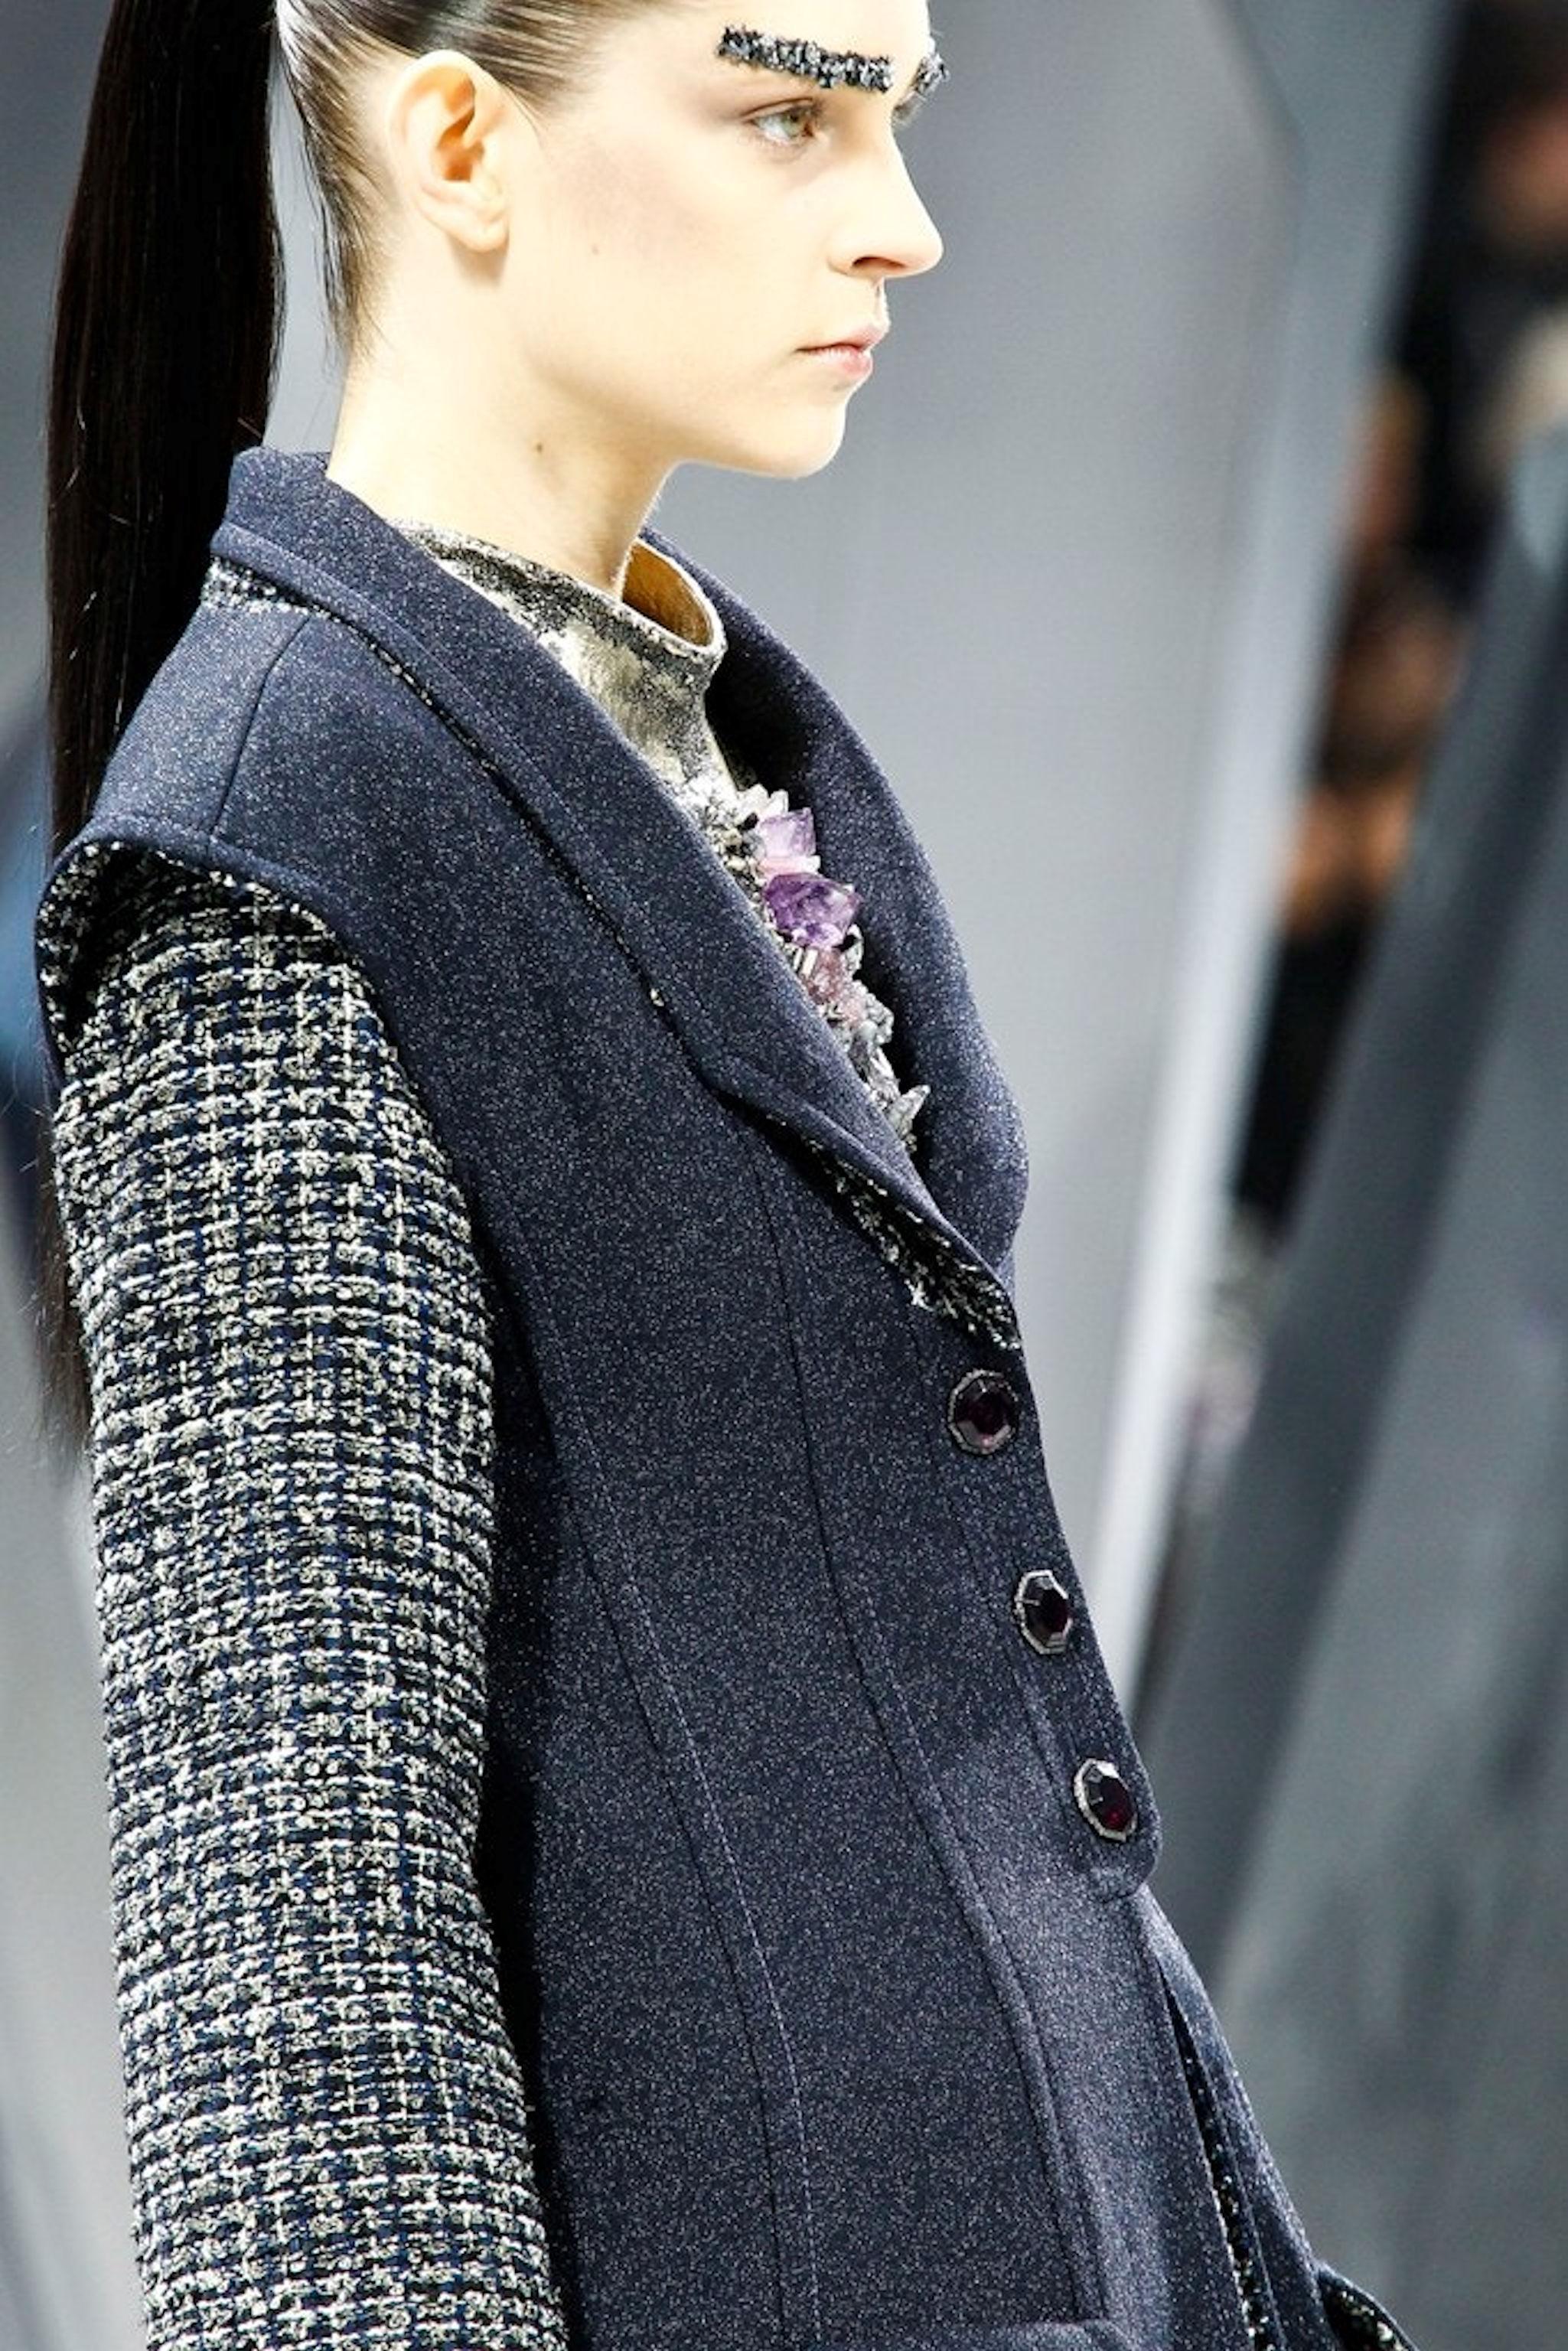 NEW Chanel Lesage Metallic Tweed Long Gilet Vest Jacket Dress Coat Dress 42 2